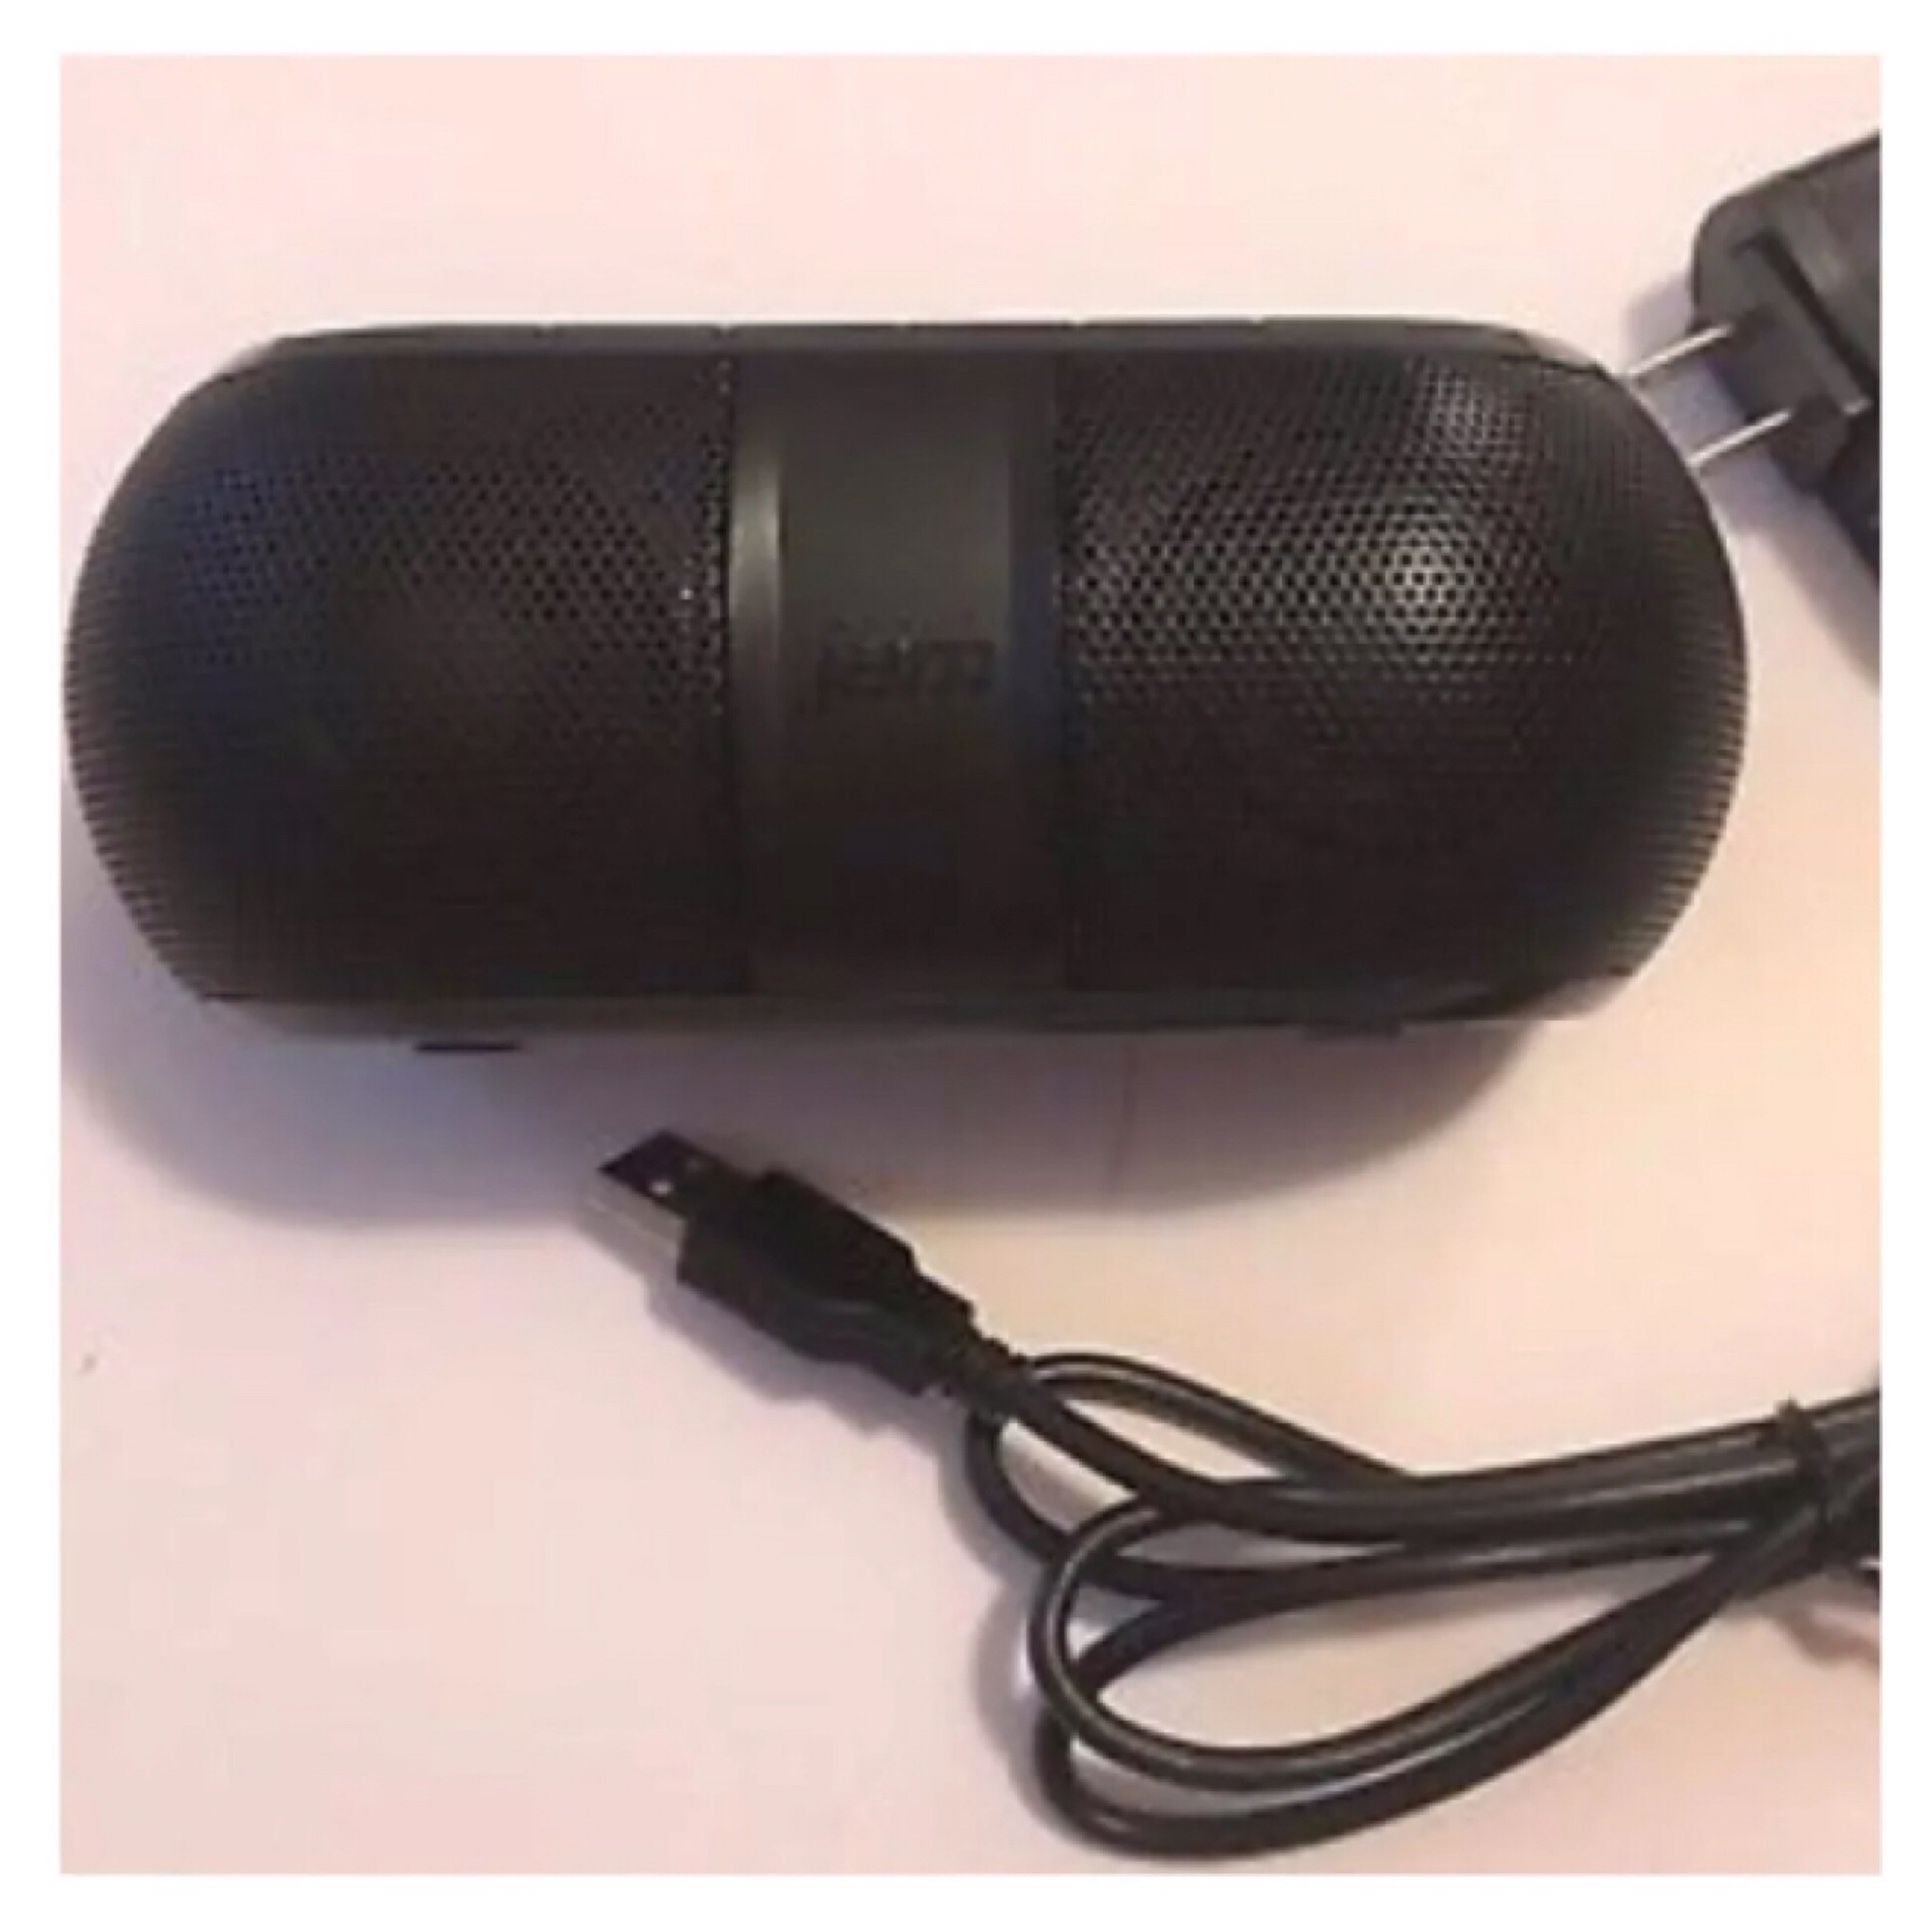 JAM Audio HX-P210BK Rave Max Wireless Bluetooth Stereo Speaker - Black